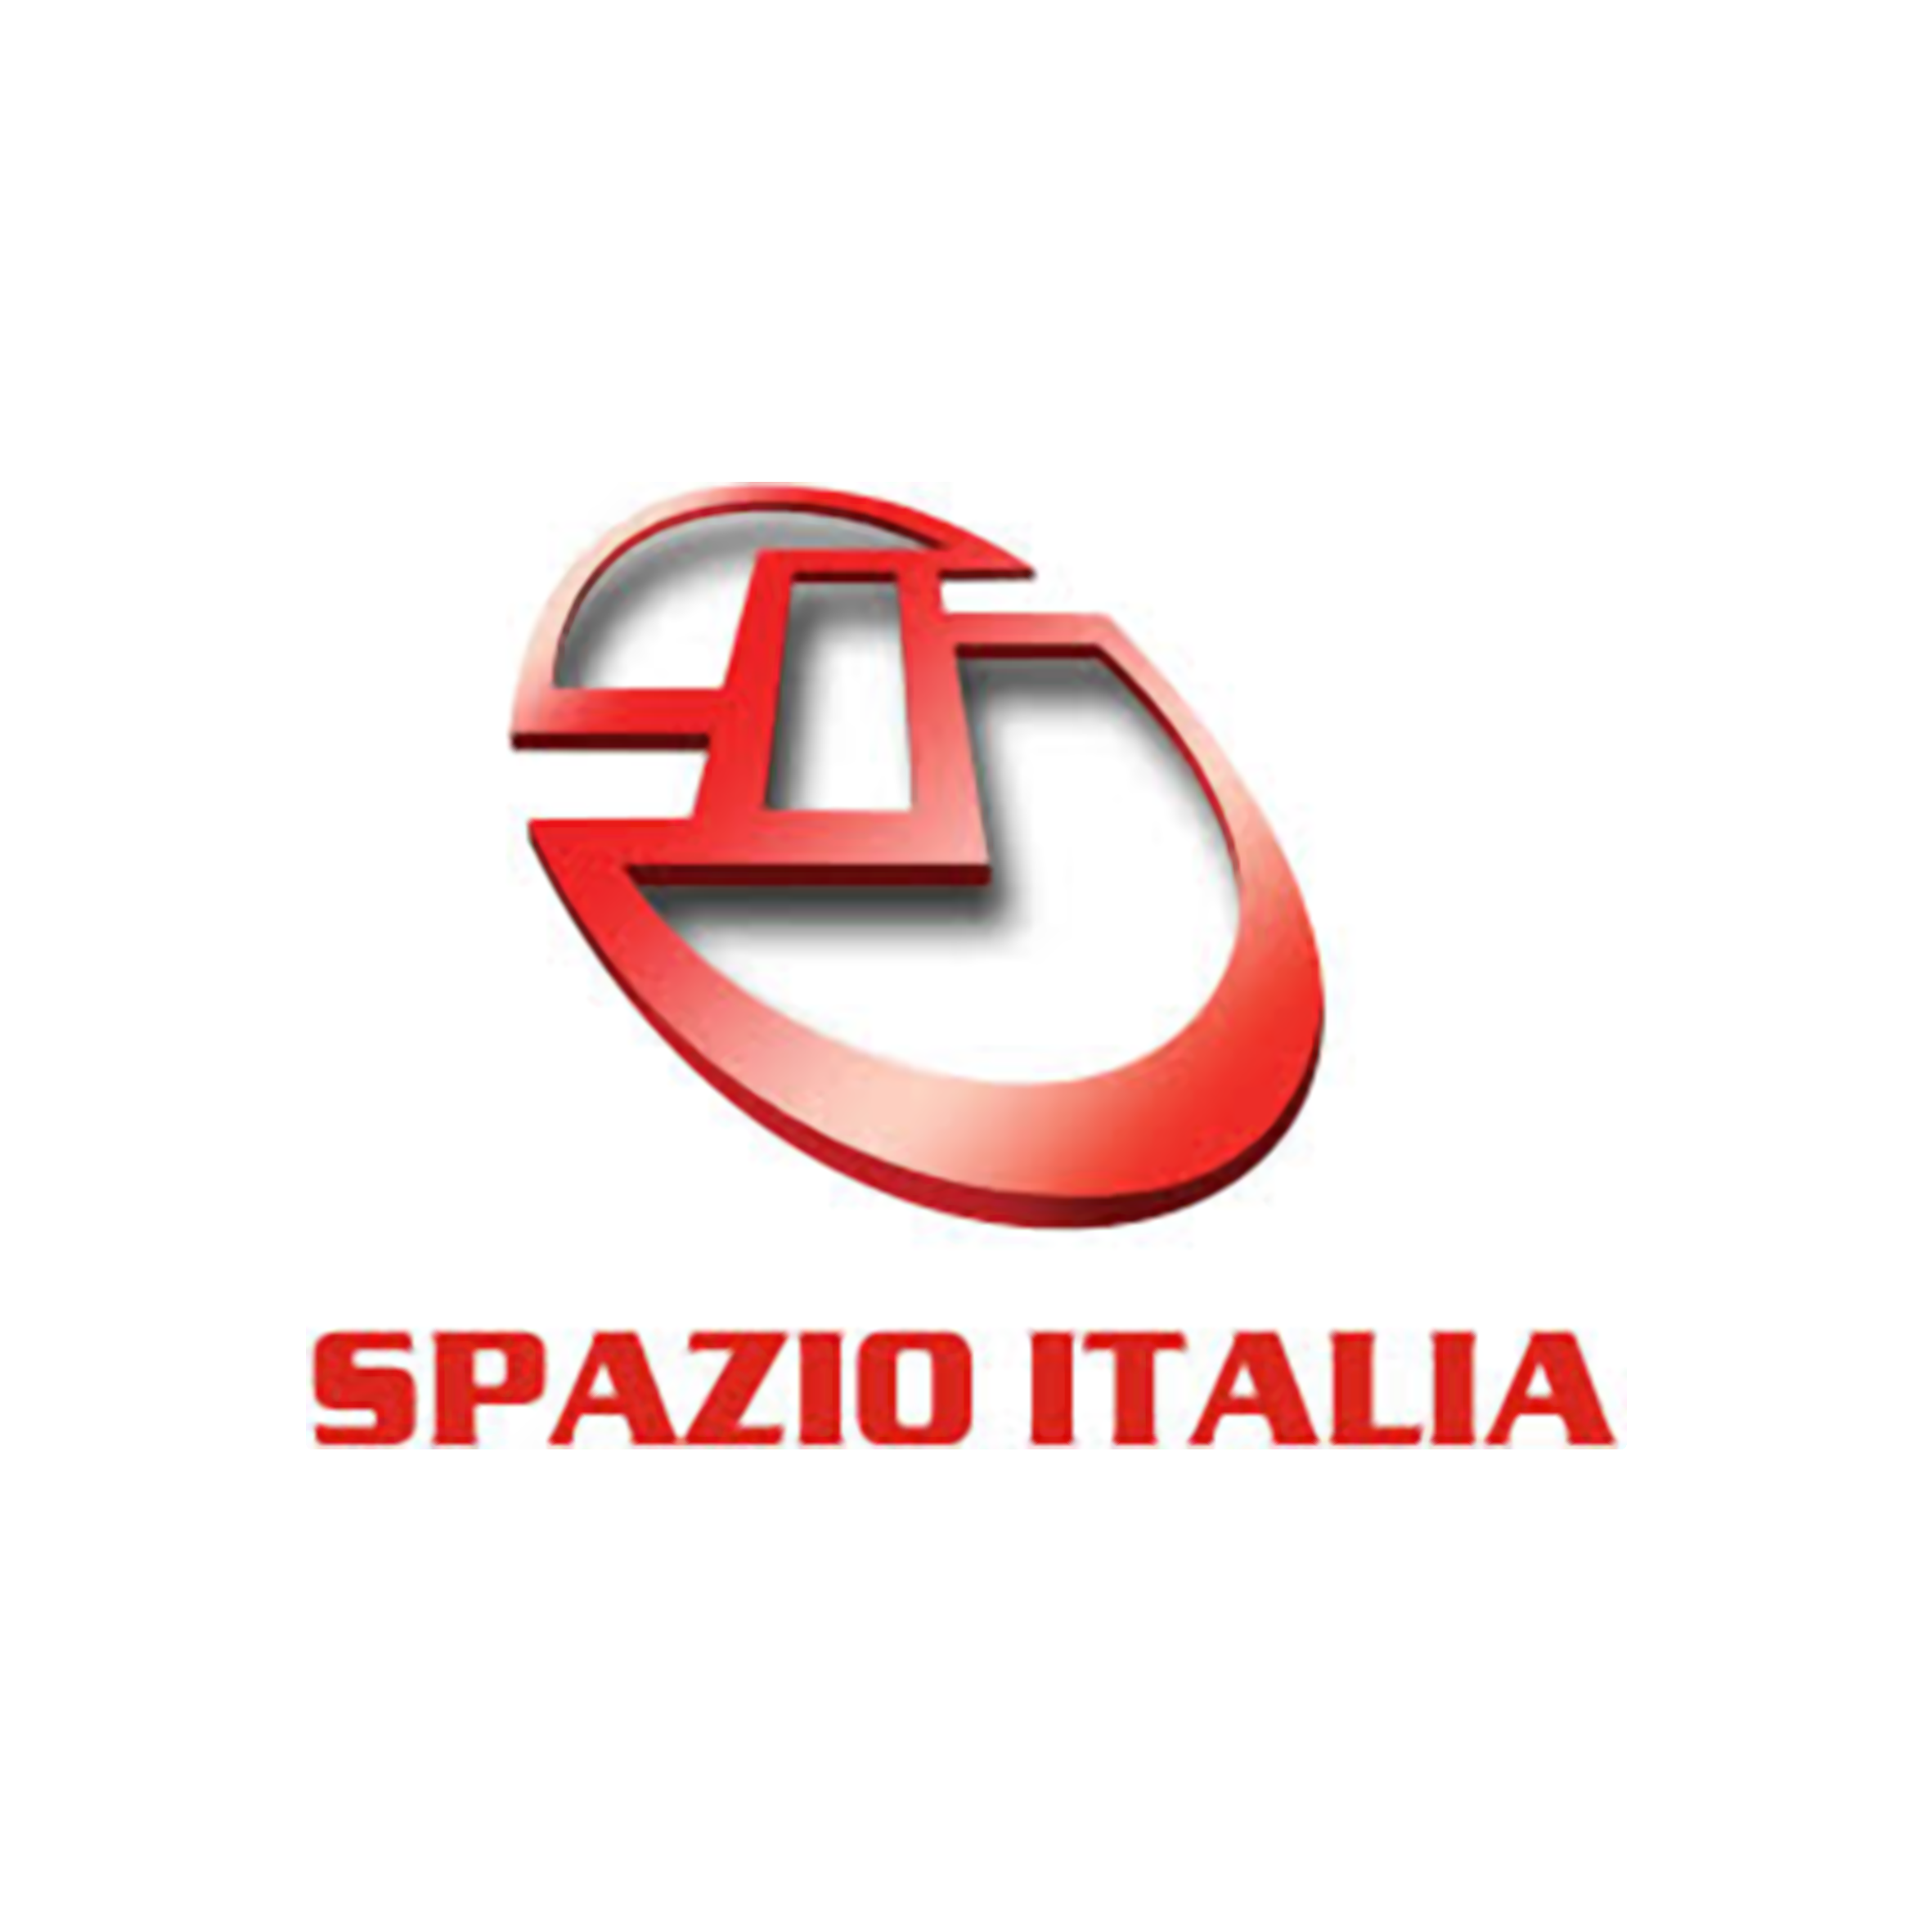 Spazio Italia